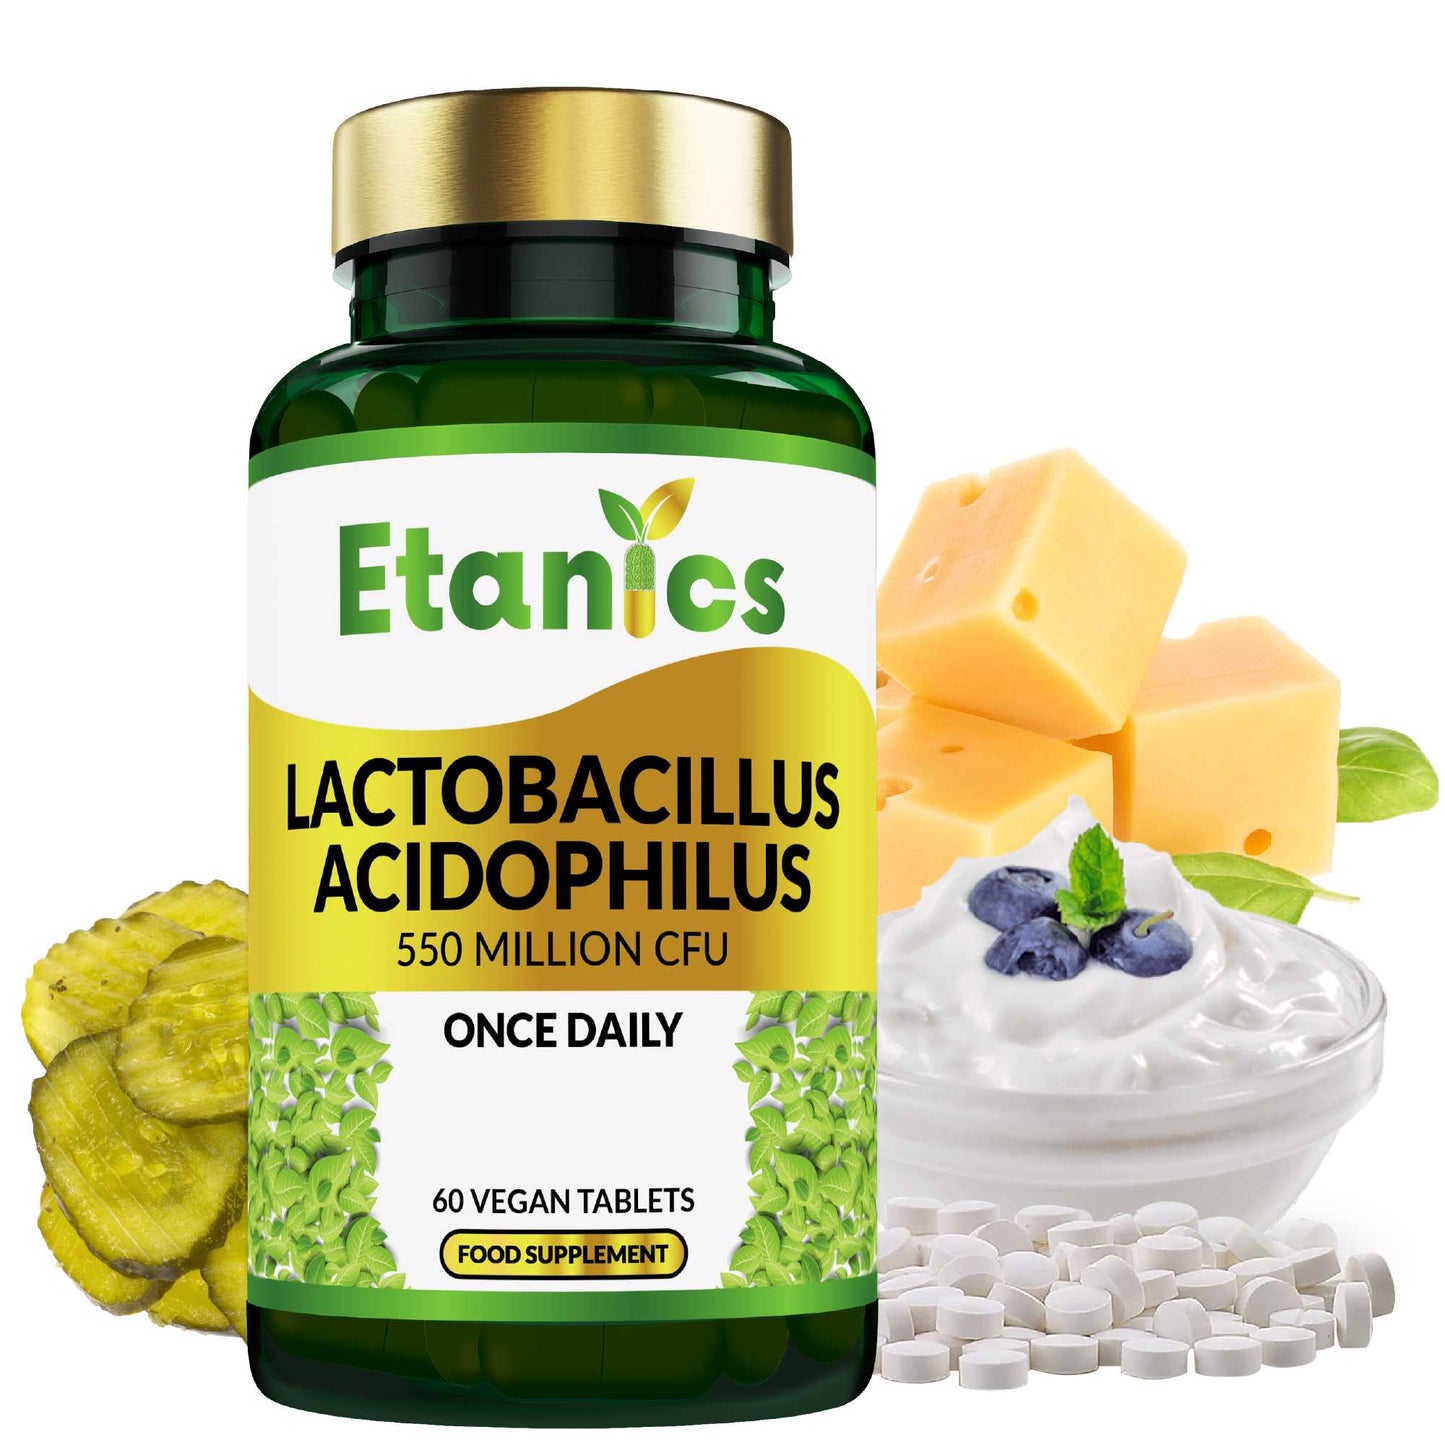 Etanics Lactobacillus Acidophilus Probiotic Supplement Front with Ingredients